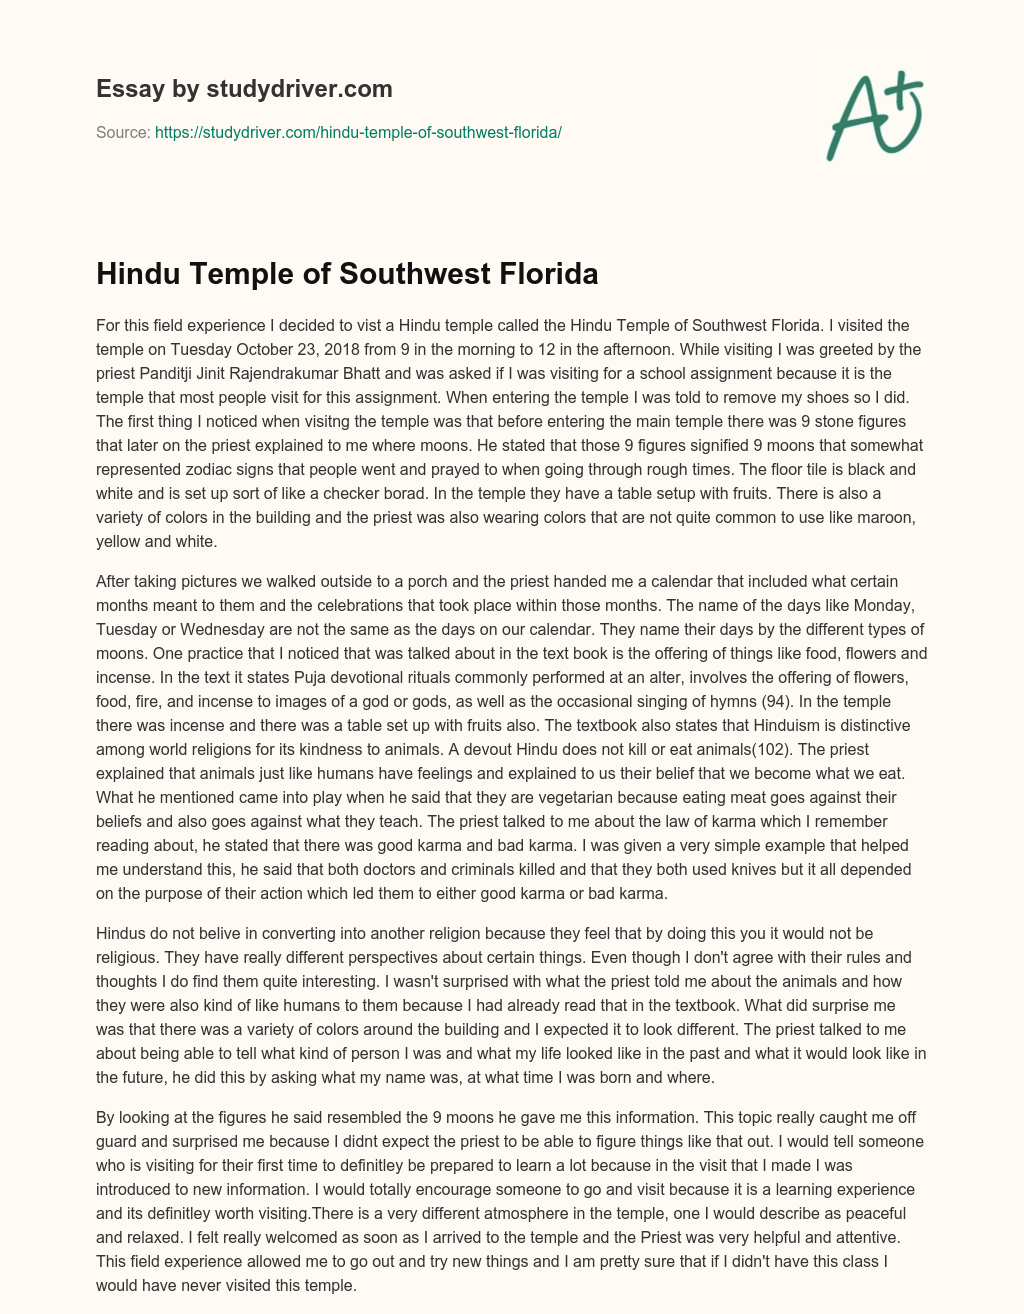 Hindu Temple of Southwest Florida essay